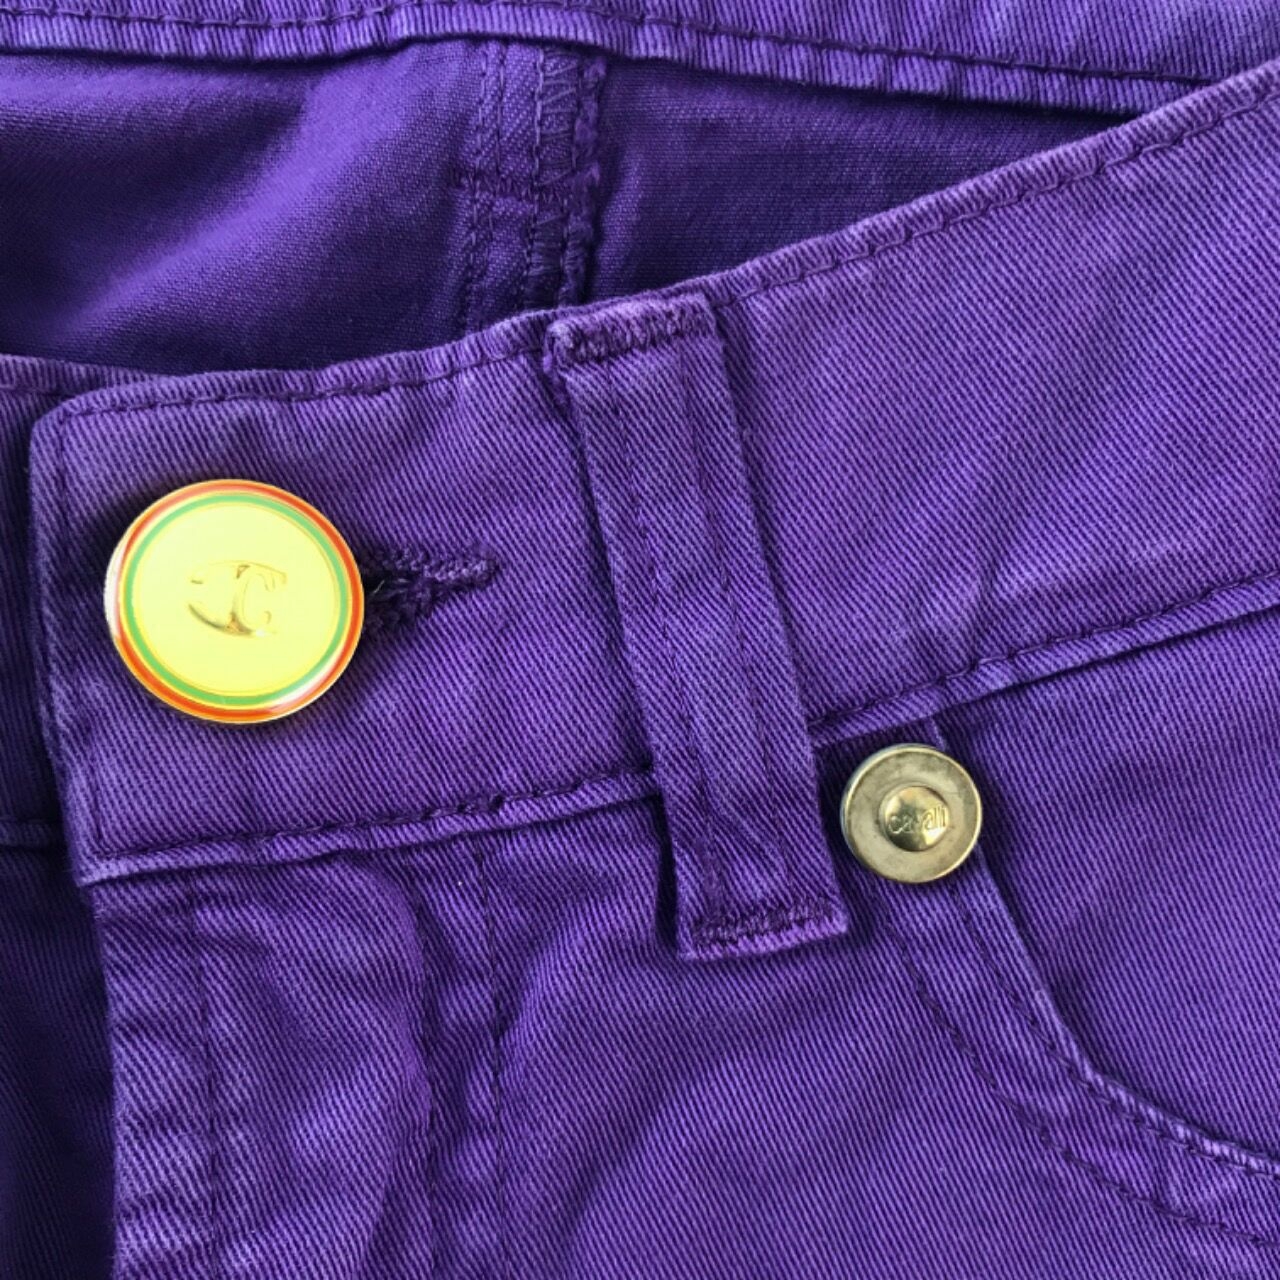 Just Cavalli Purple Rok Mini